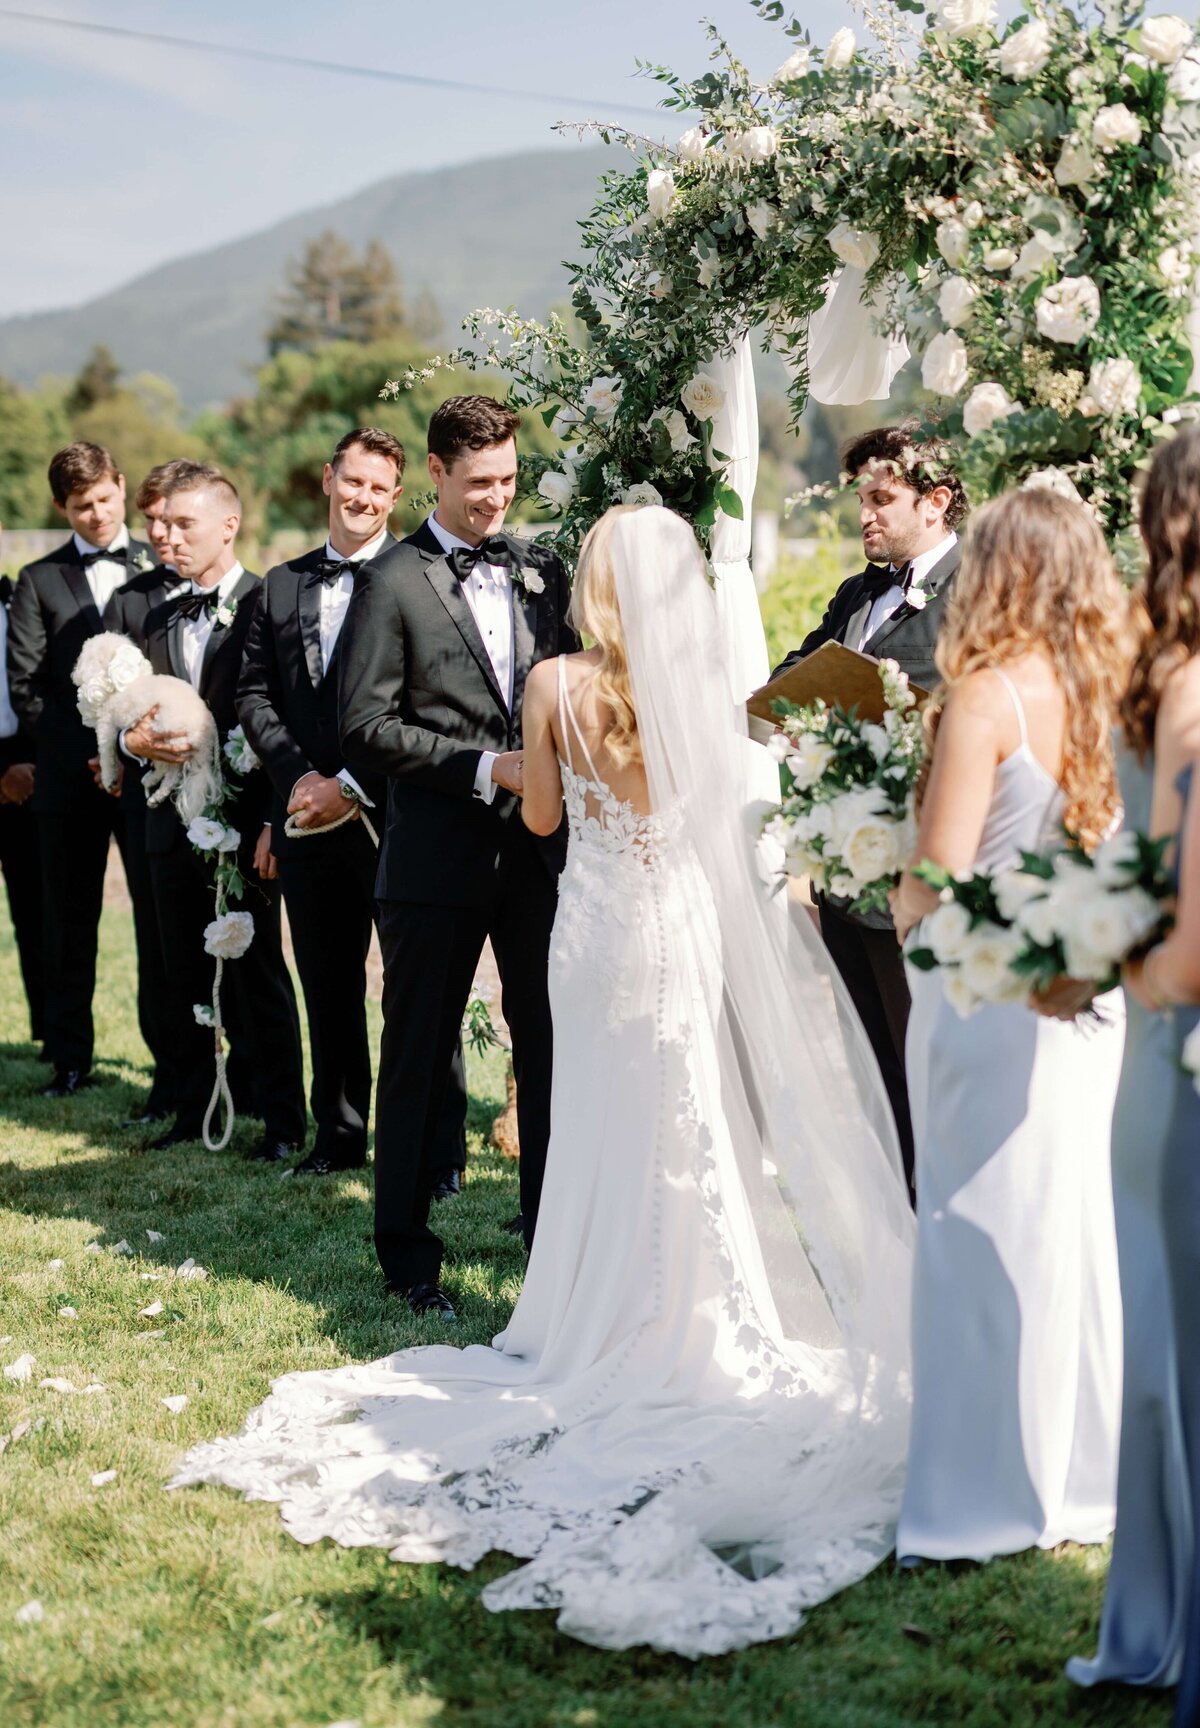 Folktale Winery Wedding, Carmel Valley - Carmel Wedding Florist - Autumn Marcelle Design (592) - Copy